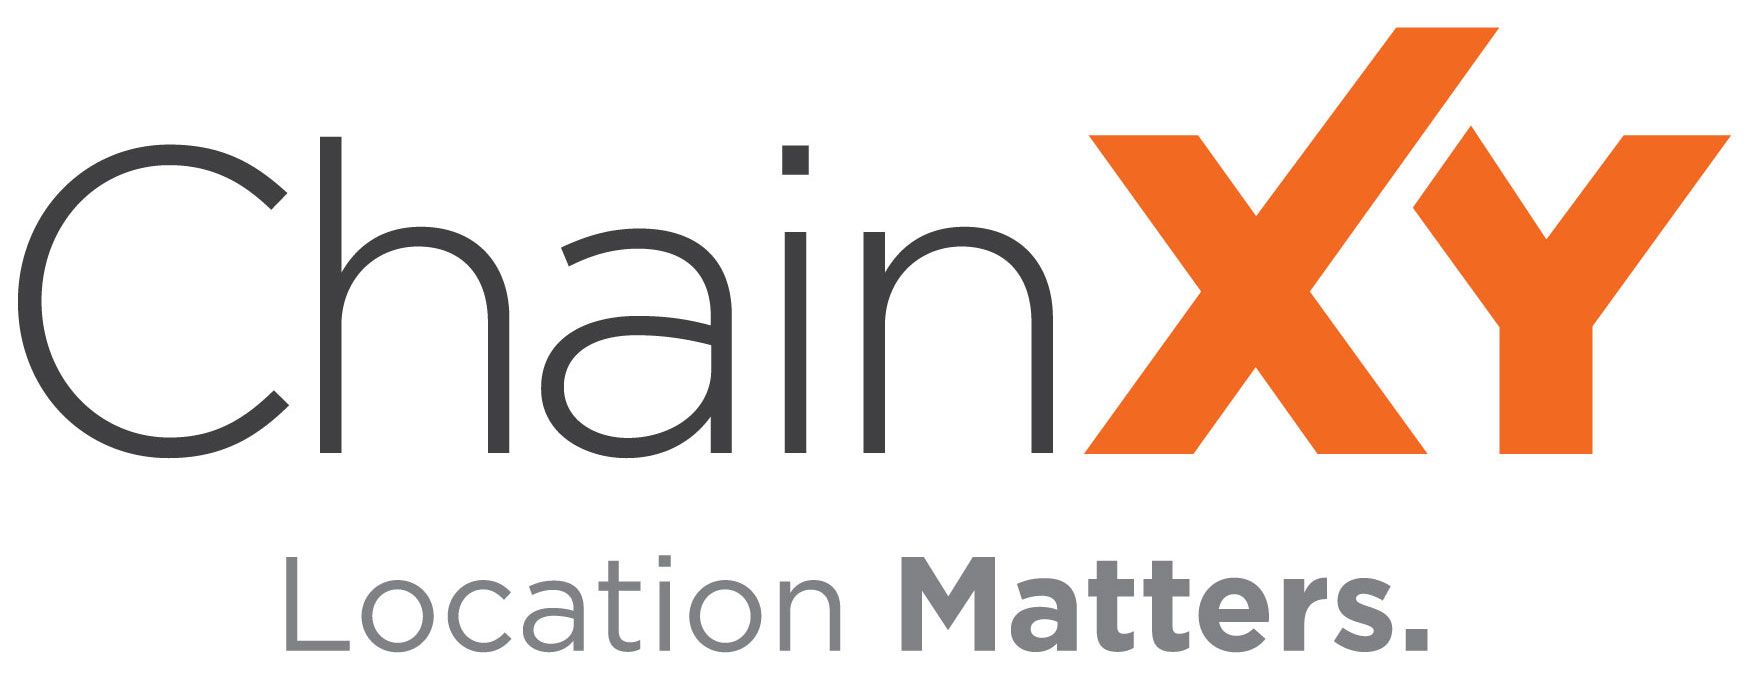 Data Partner Spotlight: ChainXY